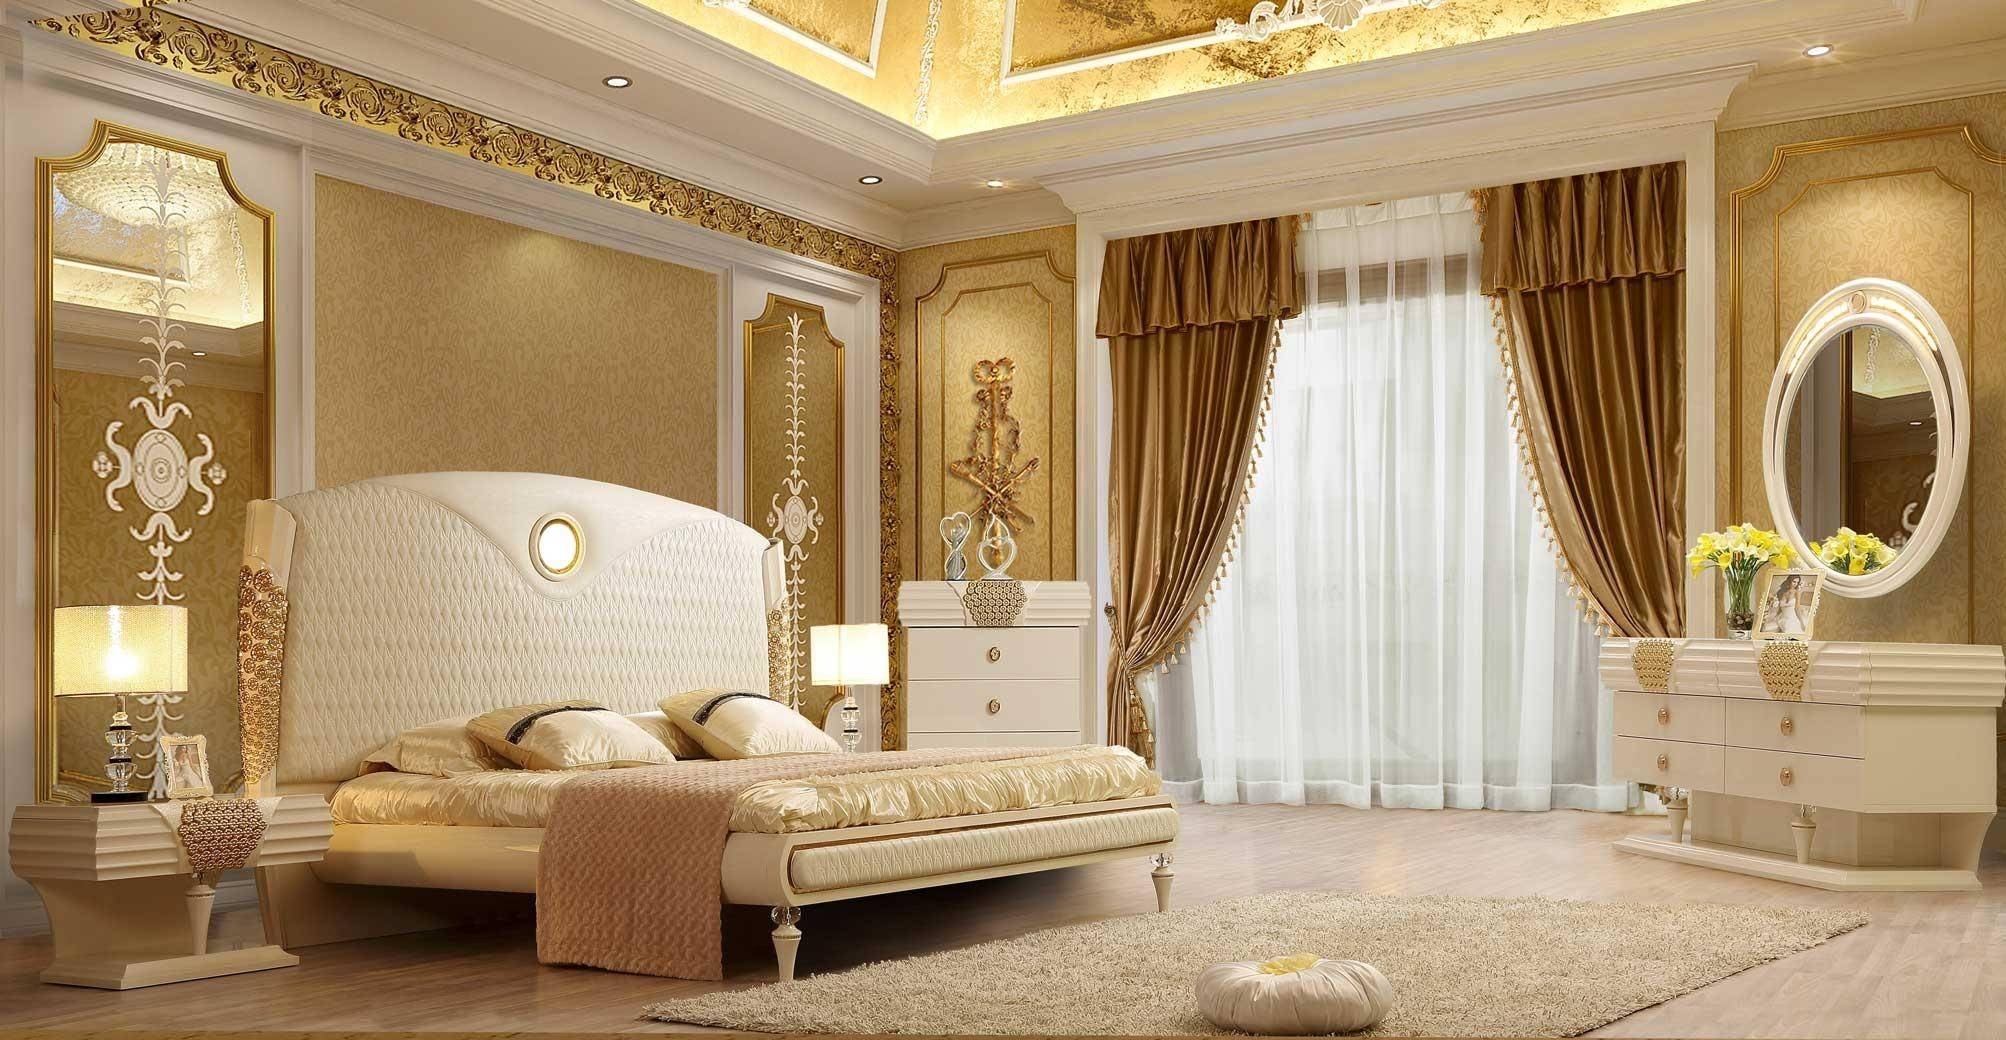 Homey Design Hd 901 California King, Luxury California King Bedroom Sets